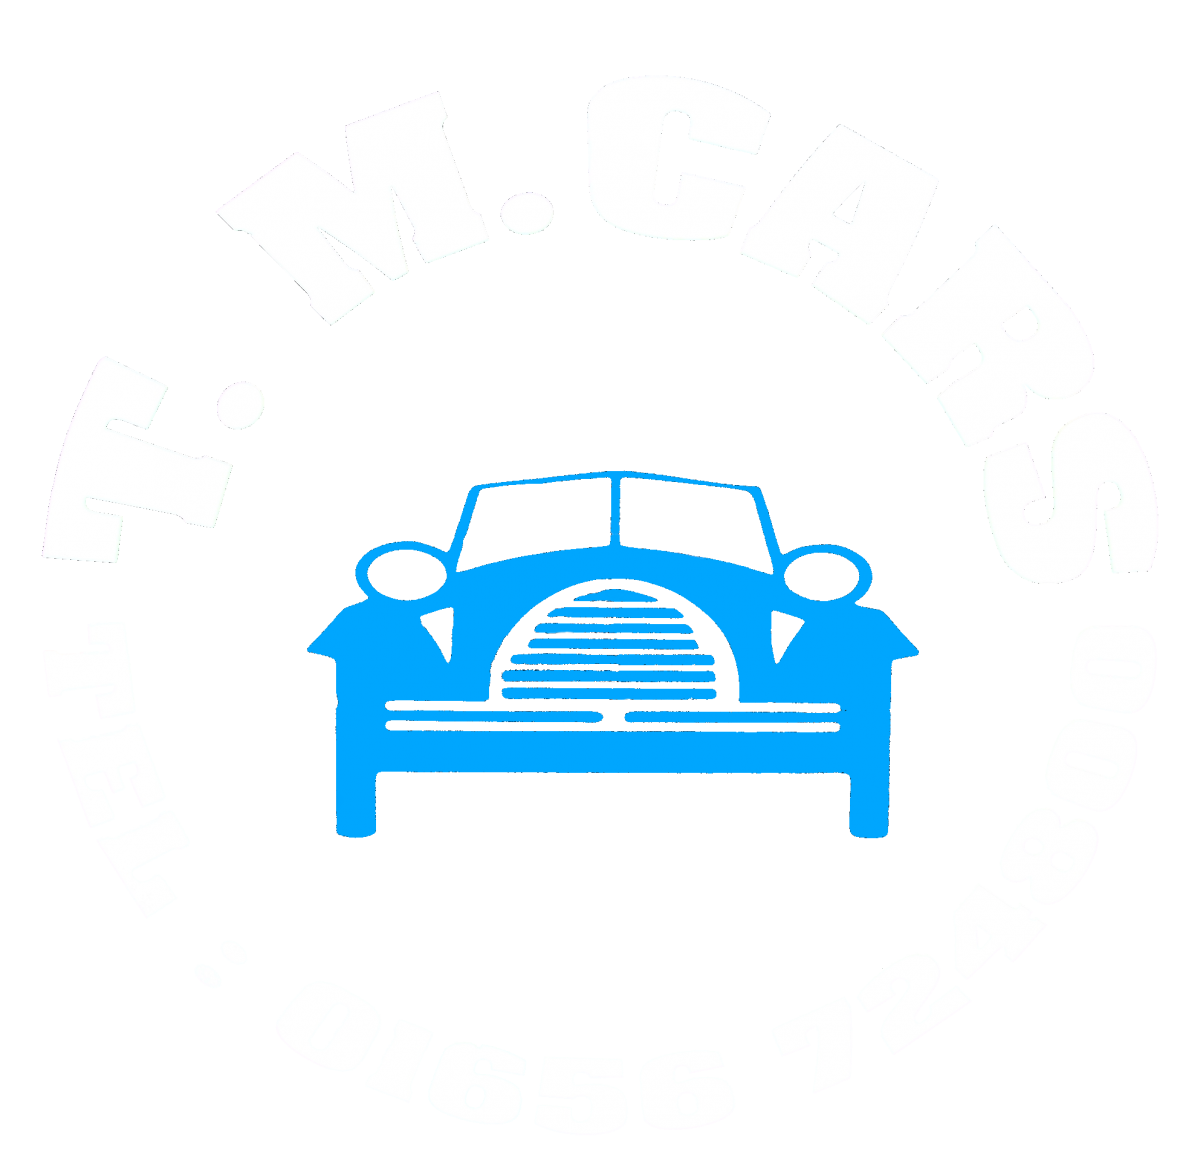 T M Cars